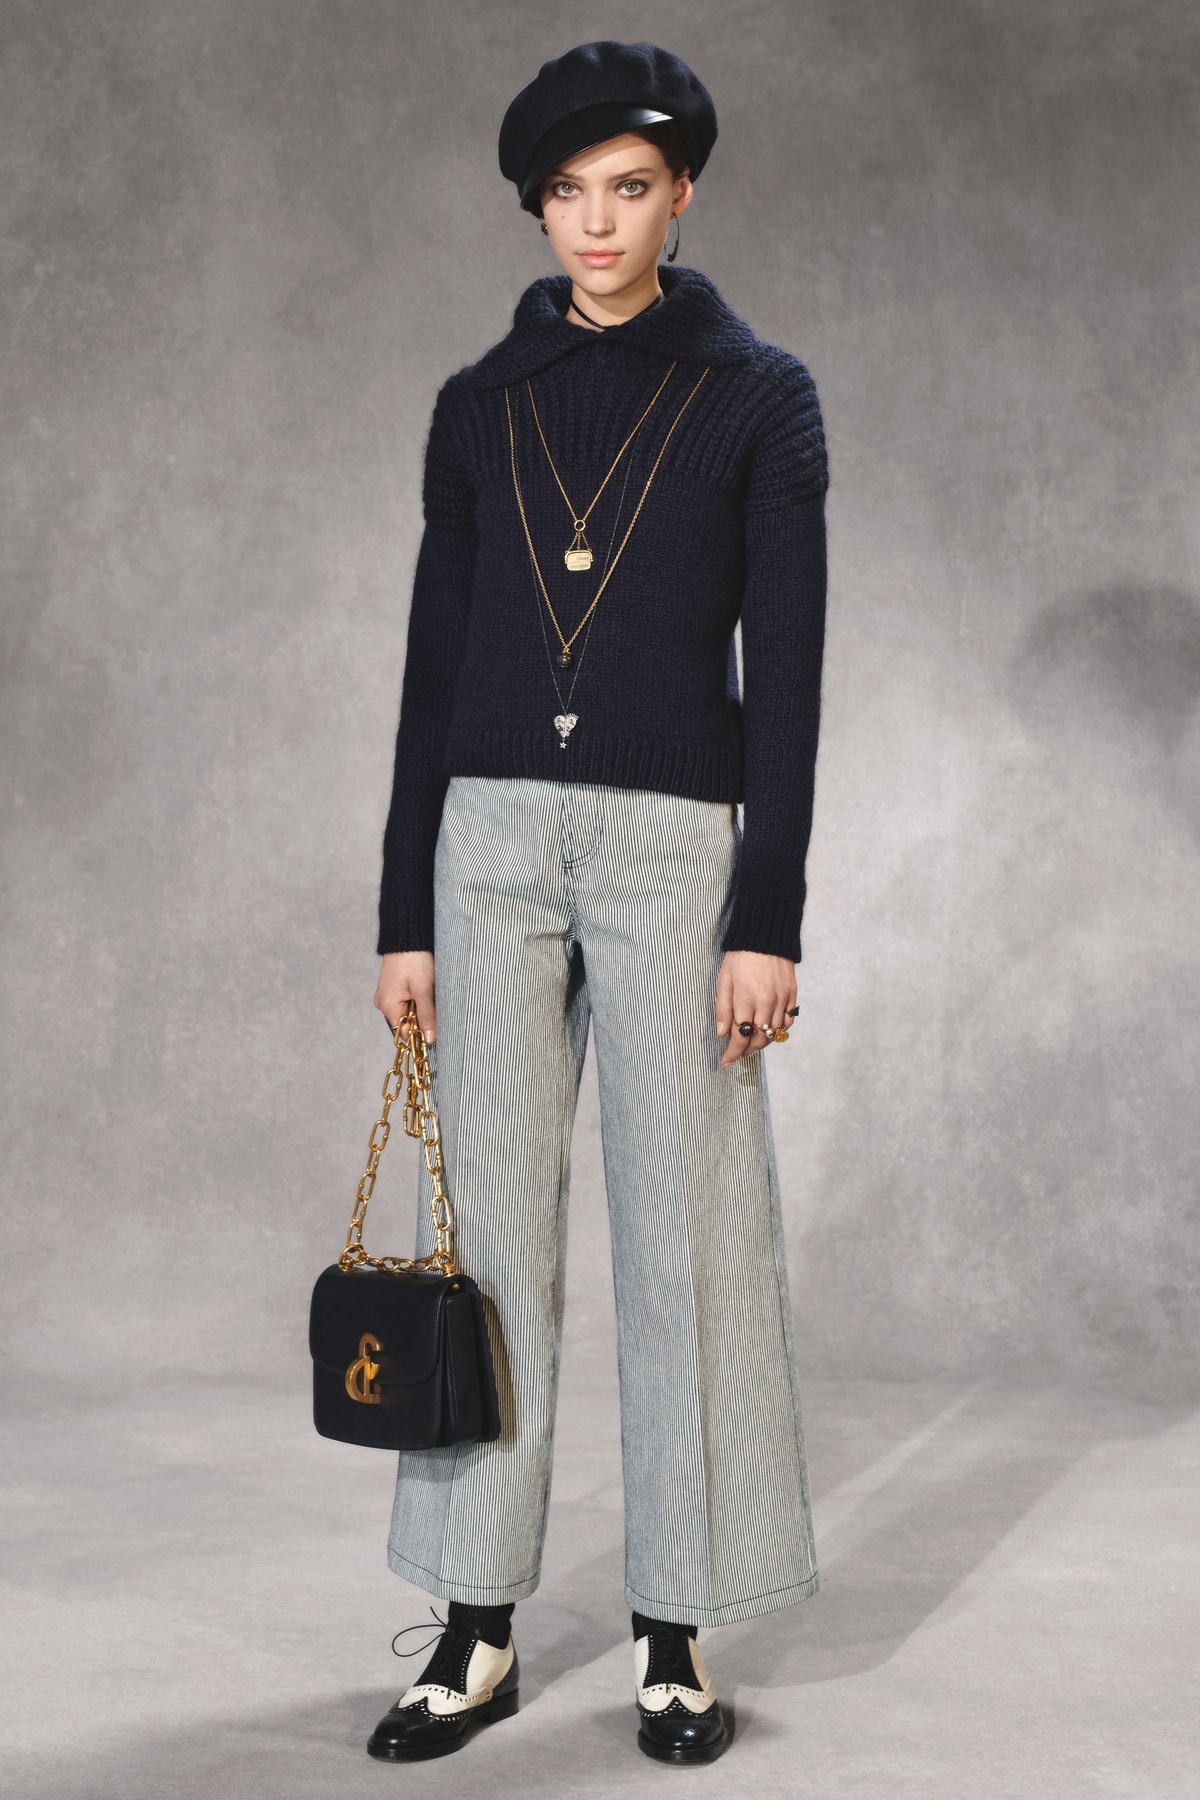 Dior Fall 2018 Collection Lookbook Sweater Pants Handbag Blue Striped Black Gold